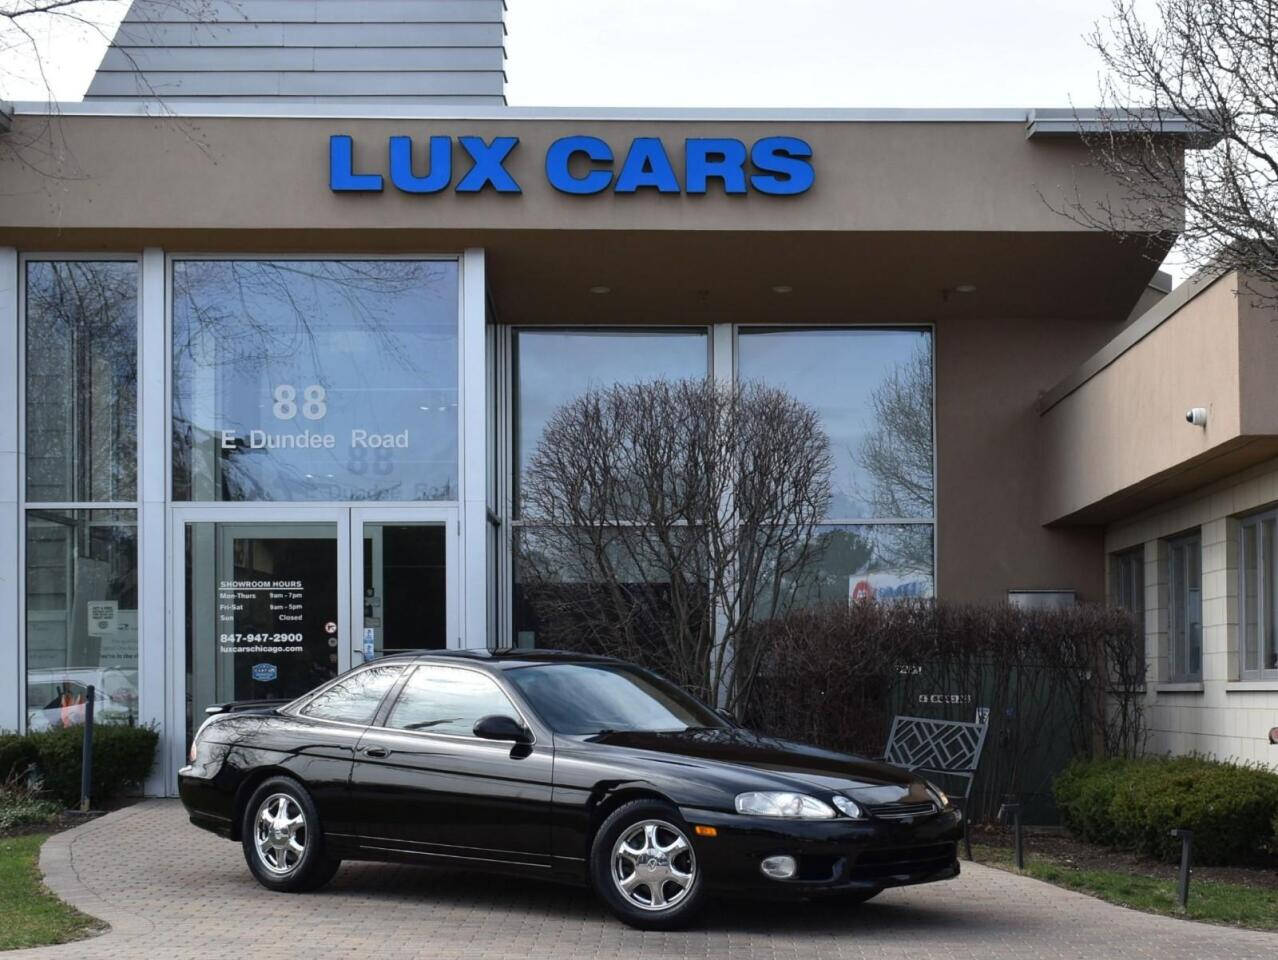 1992 Lexus SC 400 Specs, Price, MPG & Reviews